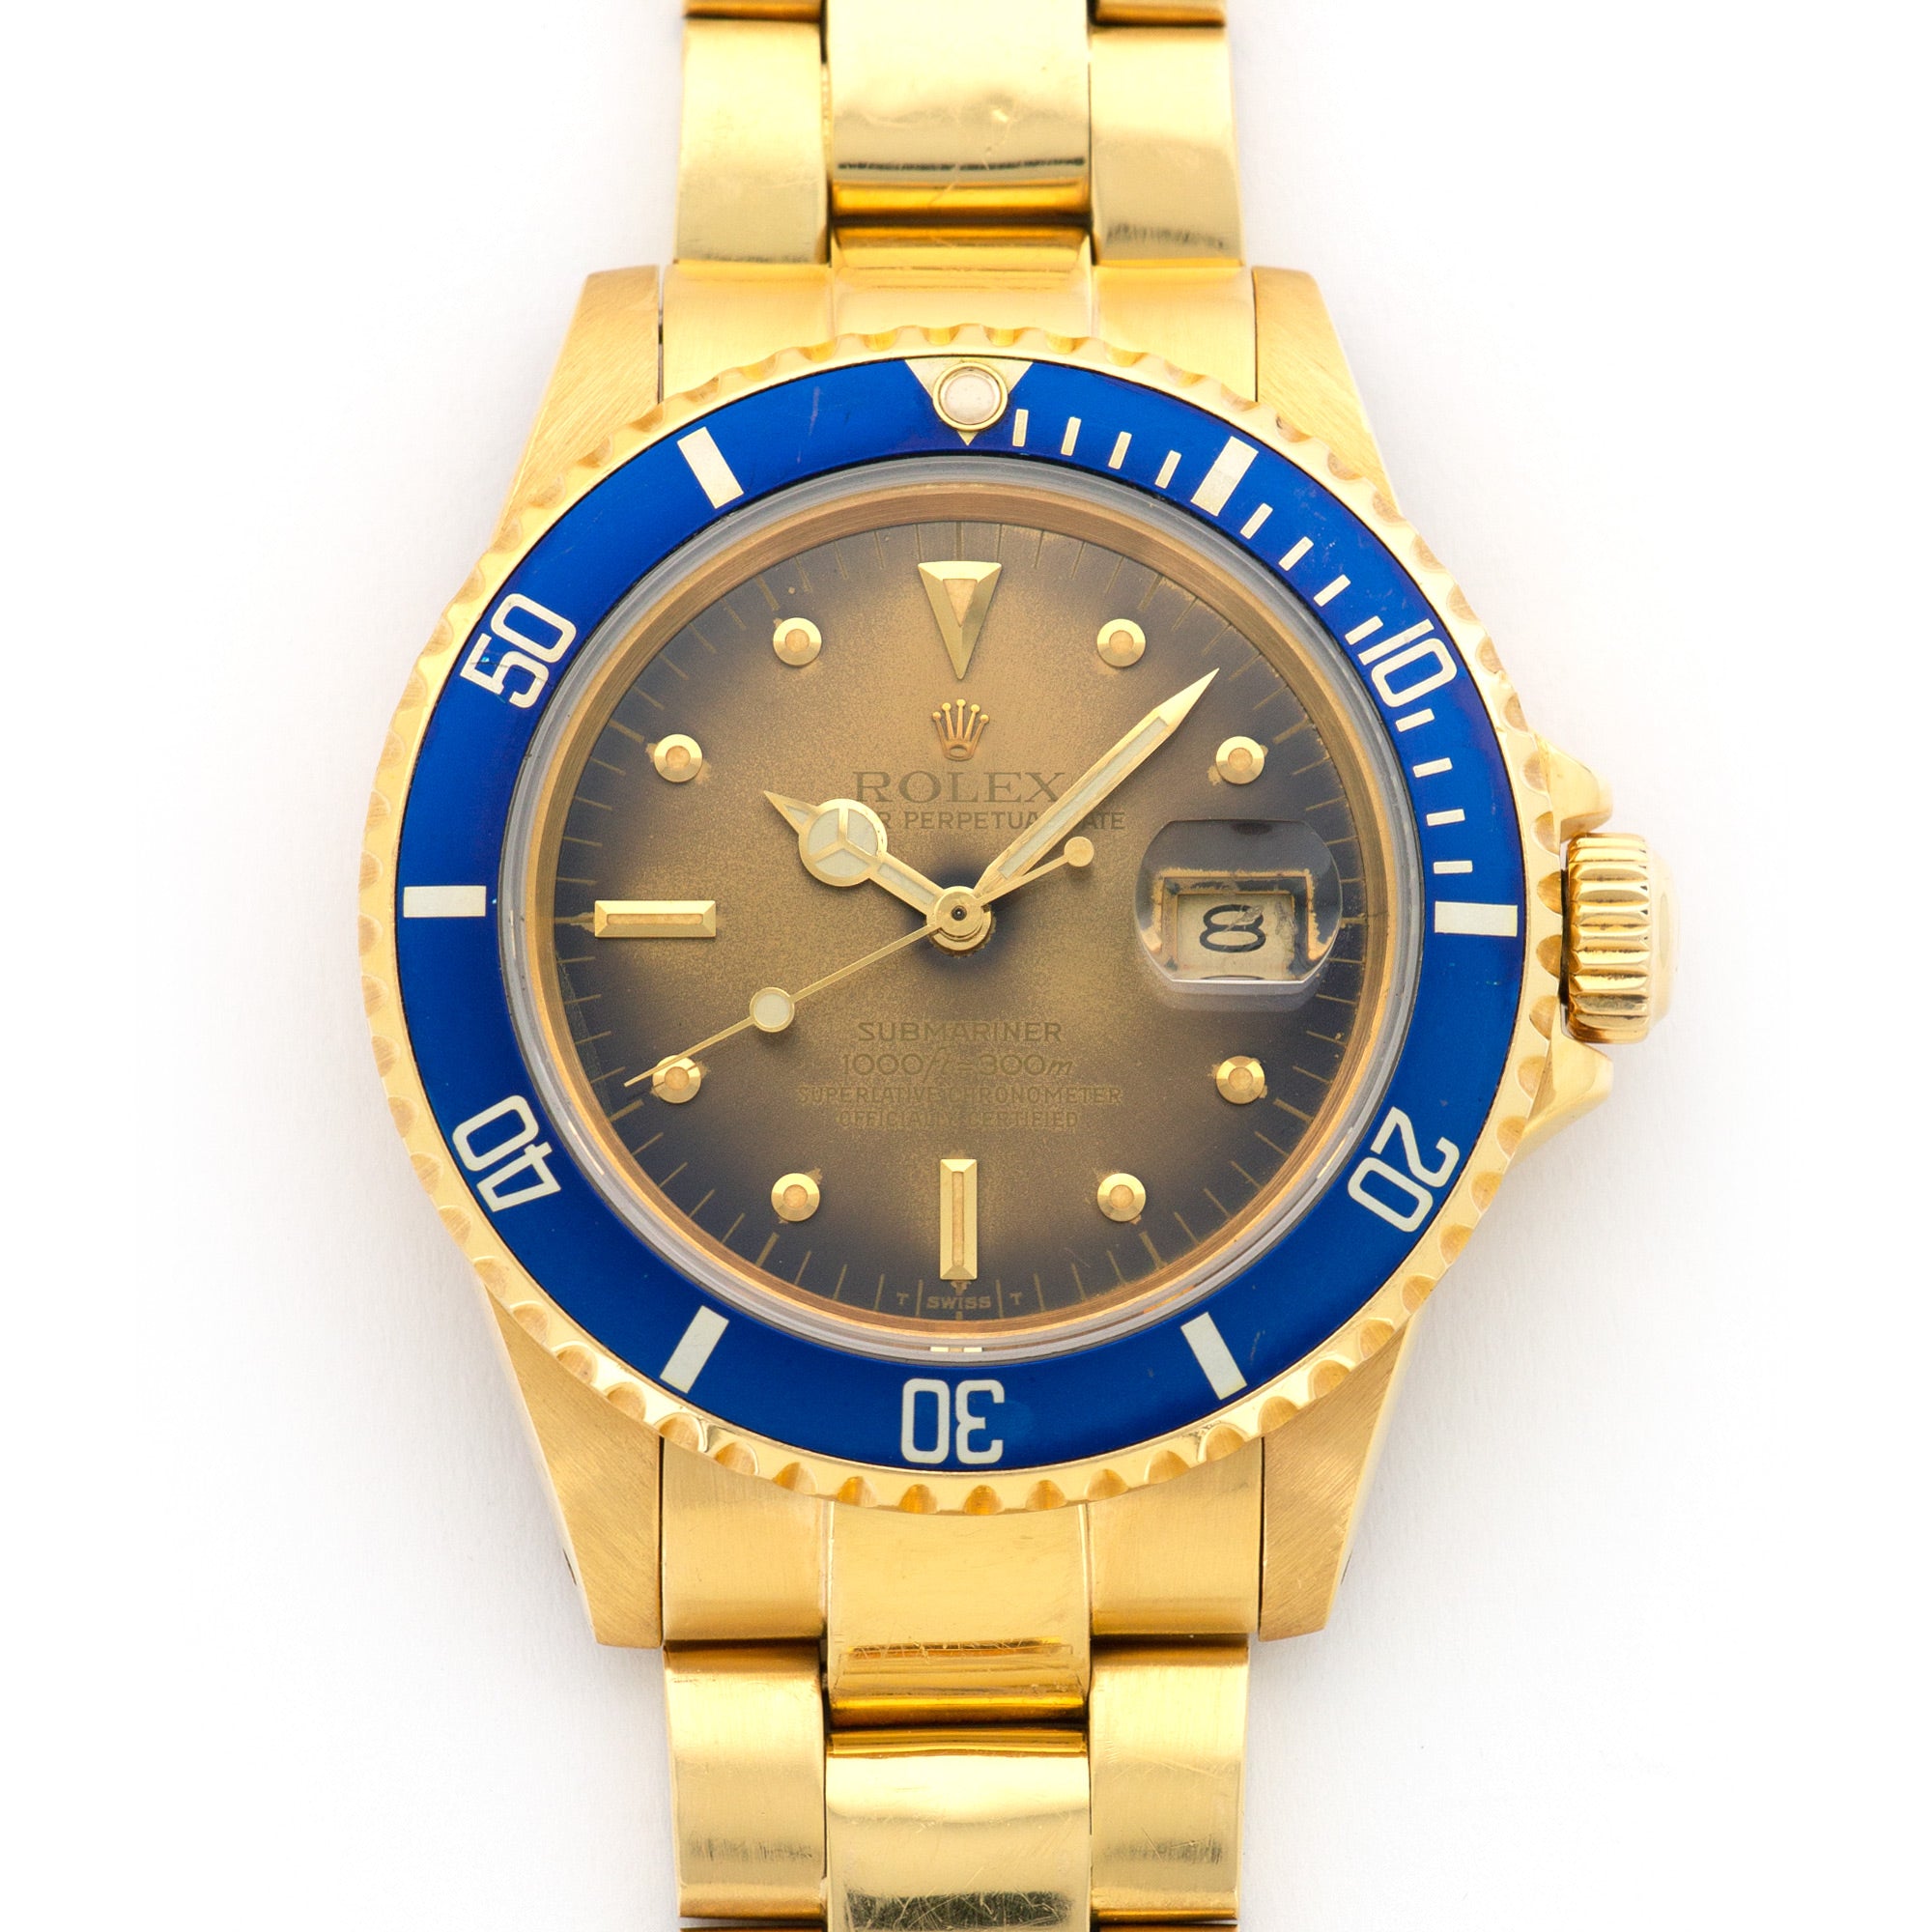 Rolex - Rolex Yellow Gold Submariner Tropical Watch Ref. 16808 - The Keystone Watches